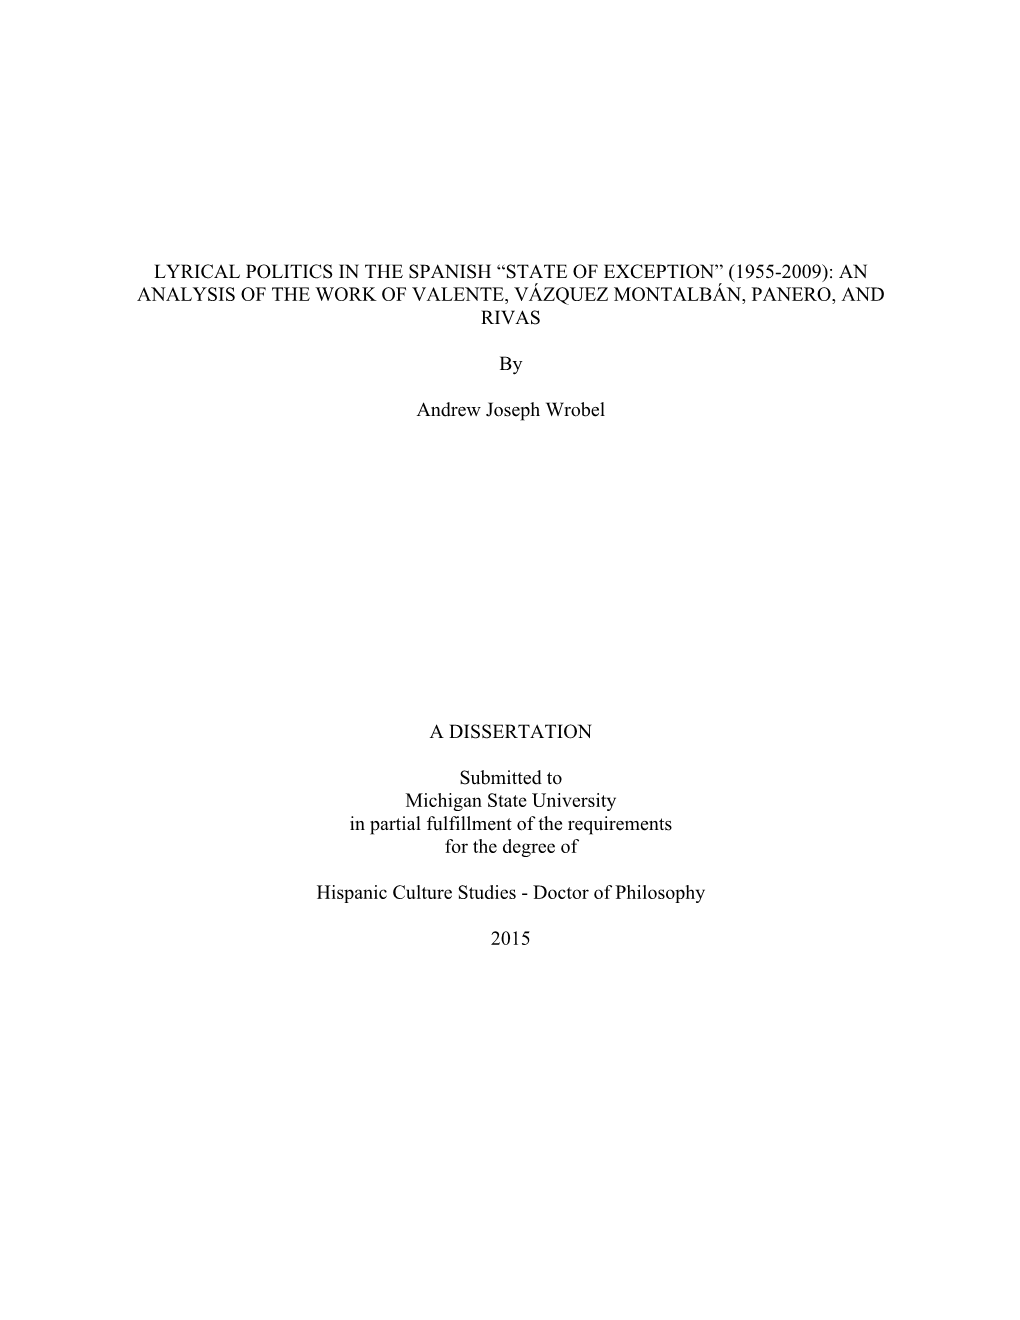 An Analysis of the Work of Valente, Vázquez Montalbán, Panero, and Rivas